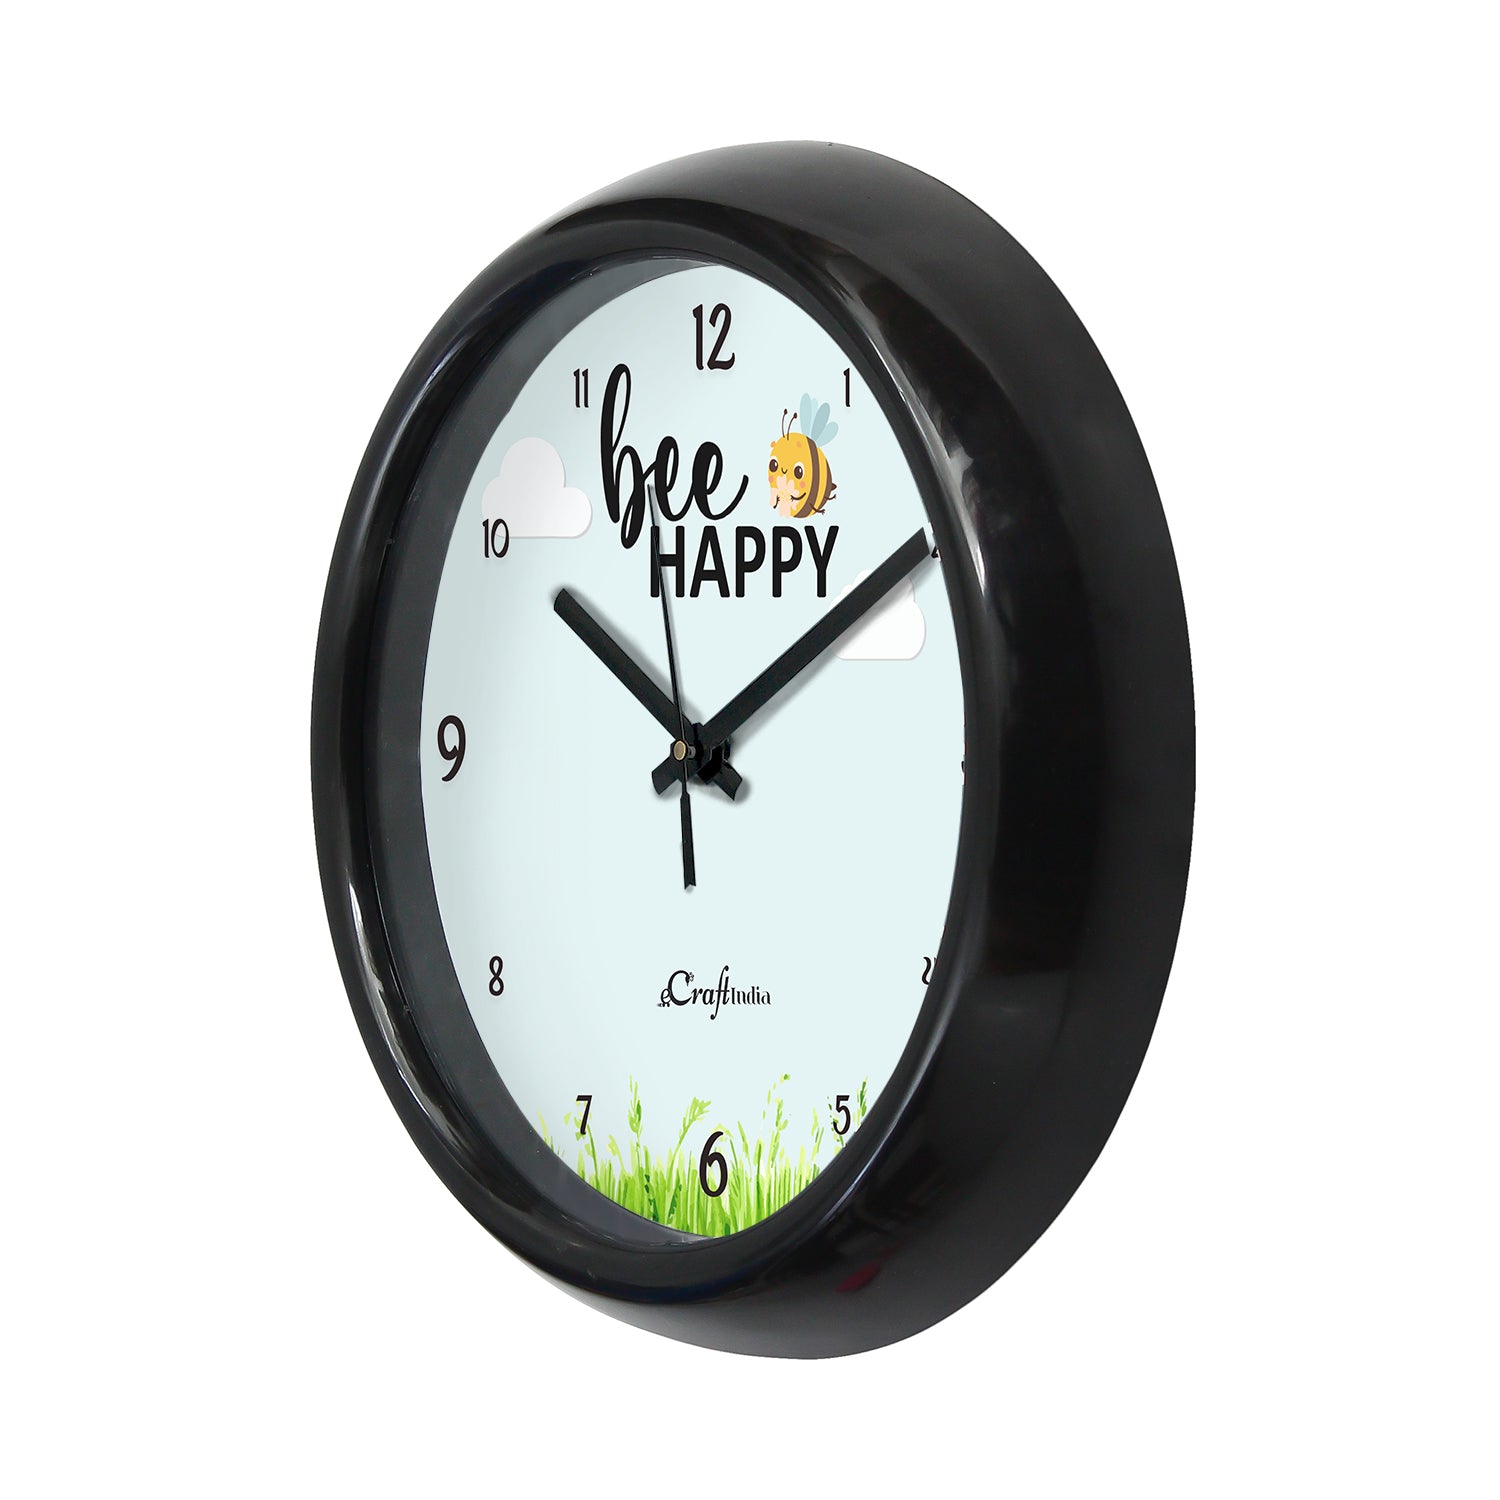 "Bee Happy" Designer Round Analog Black Wall Clock 4